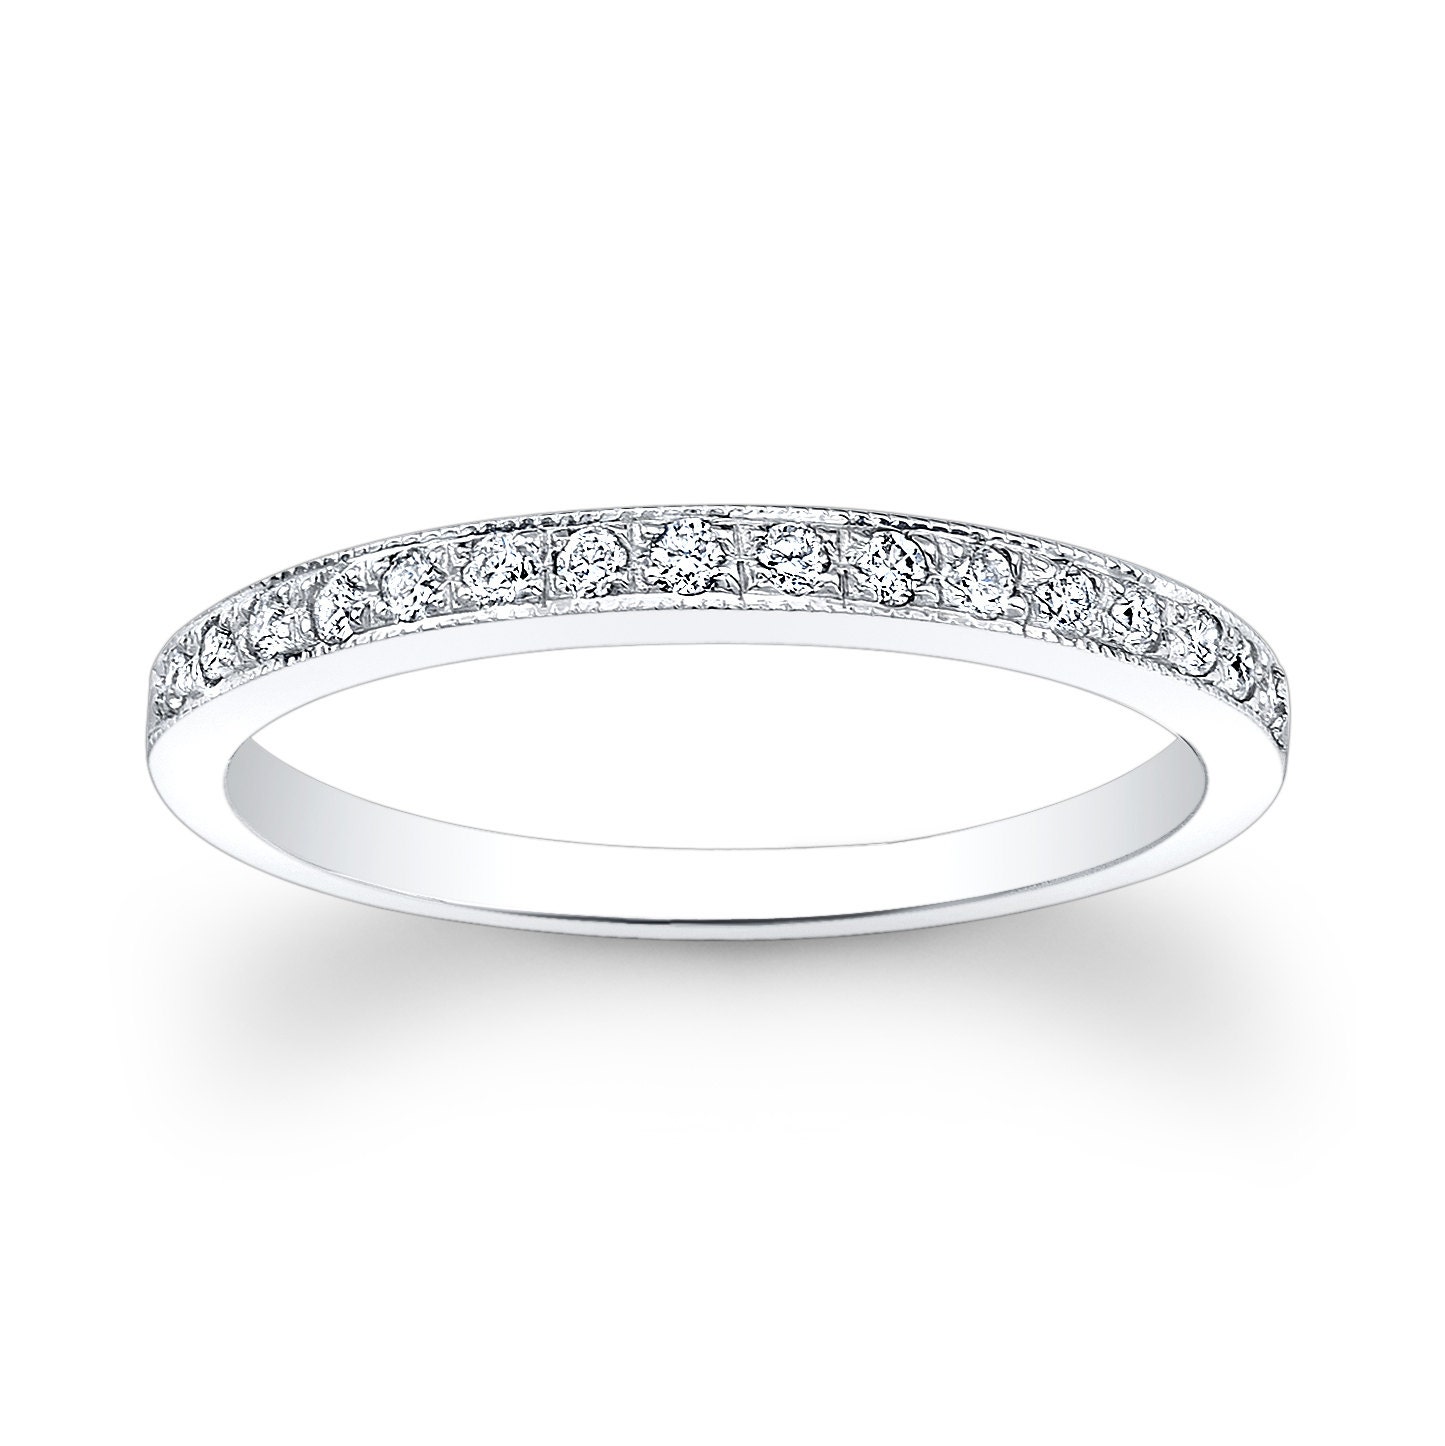 Ladies thin platinum diamond pave wedding band 0.15 ctw G-VS2 quality ...